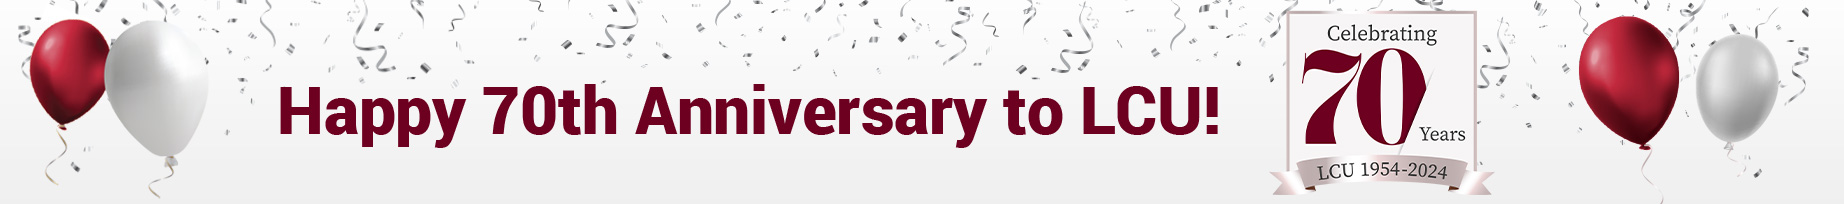 Happy 70th Anniversary to LCU!